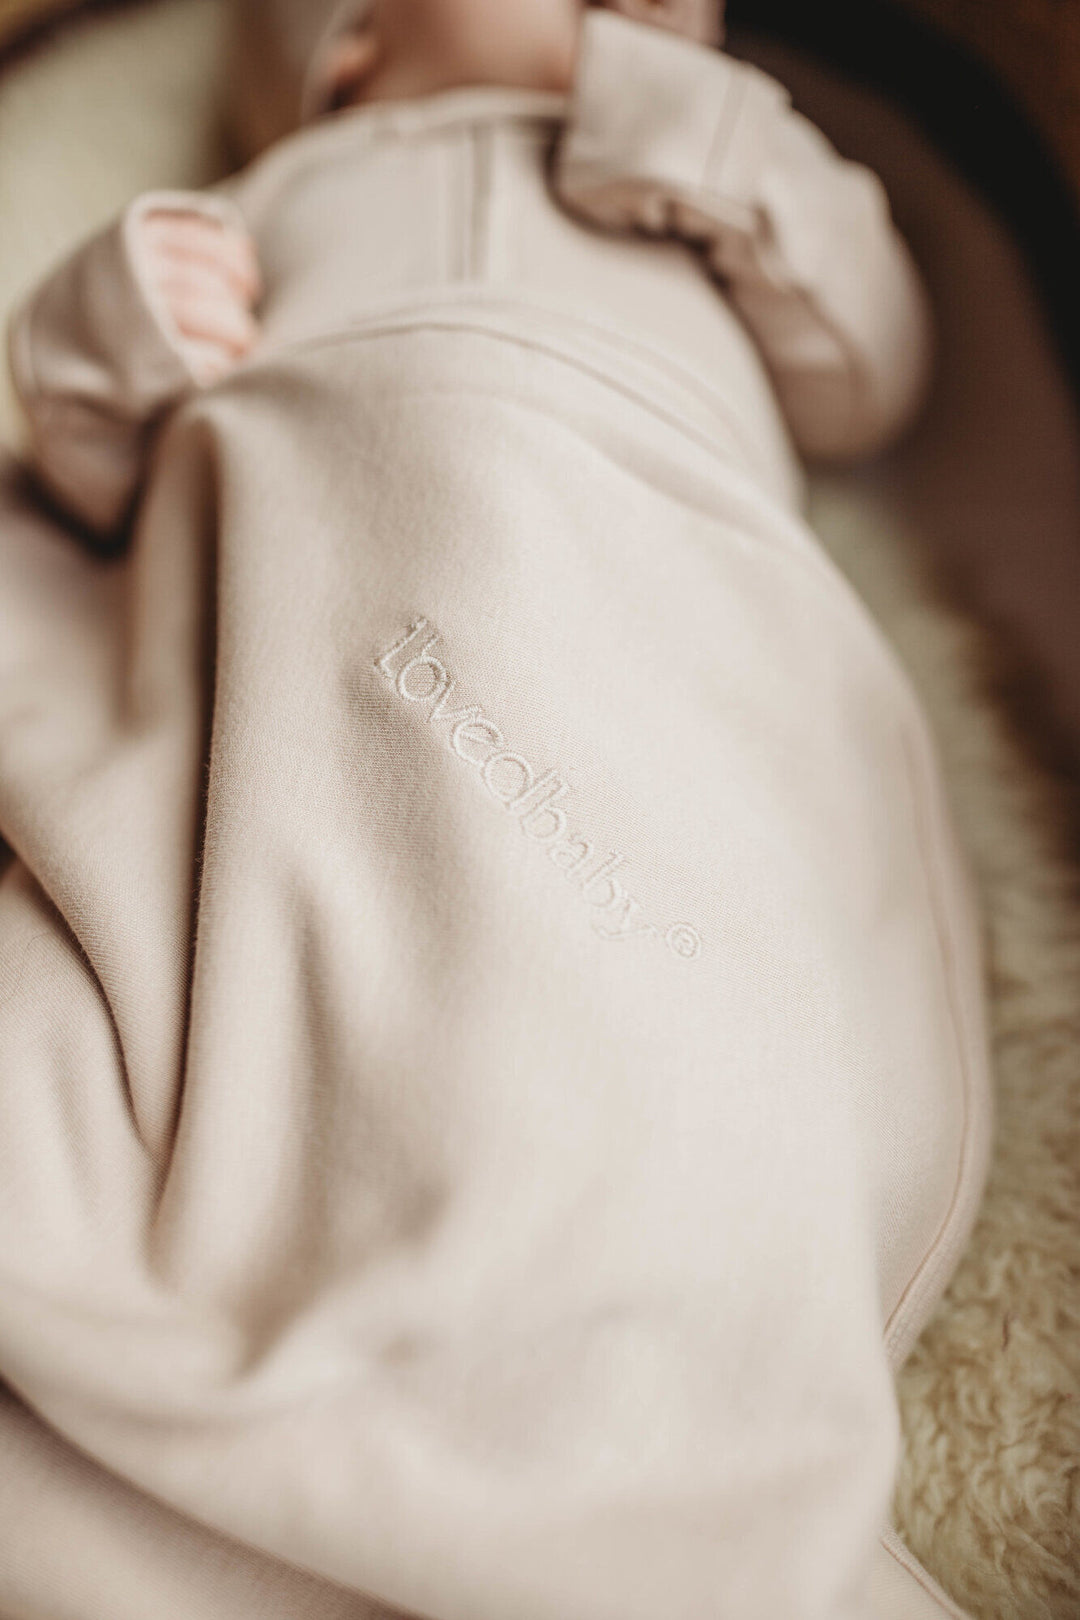 Child wearing Organic Swaddling Blanket in Oatmeal.